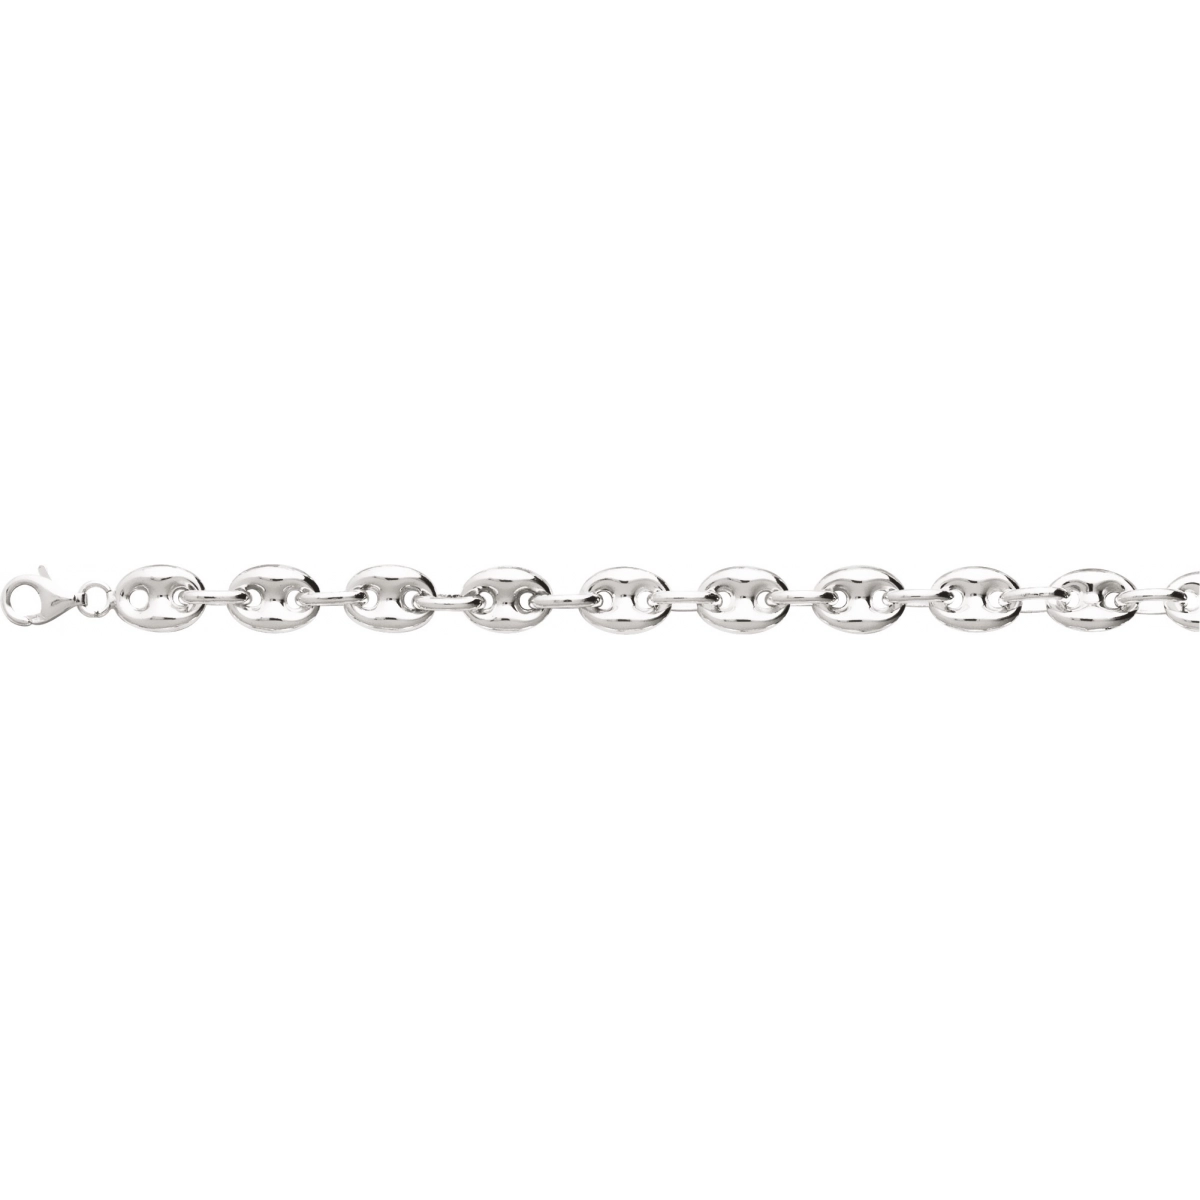 Bracelet 925 Silver Lua Blanca  324857I - Size 21